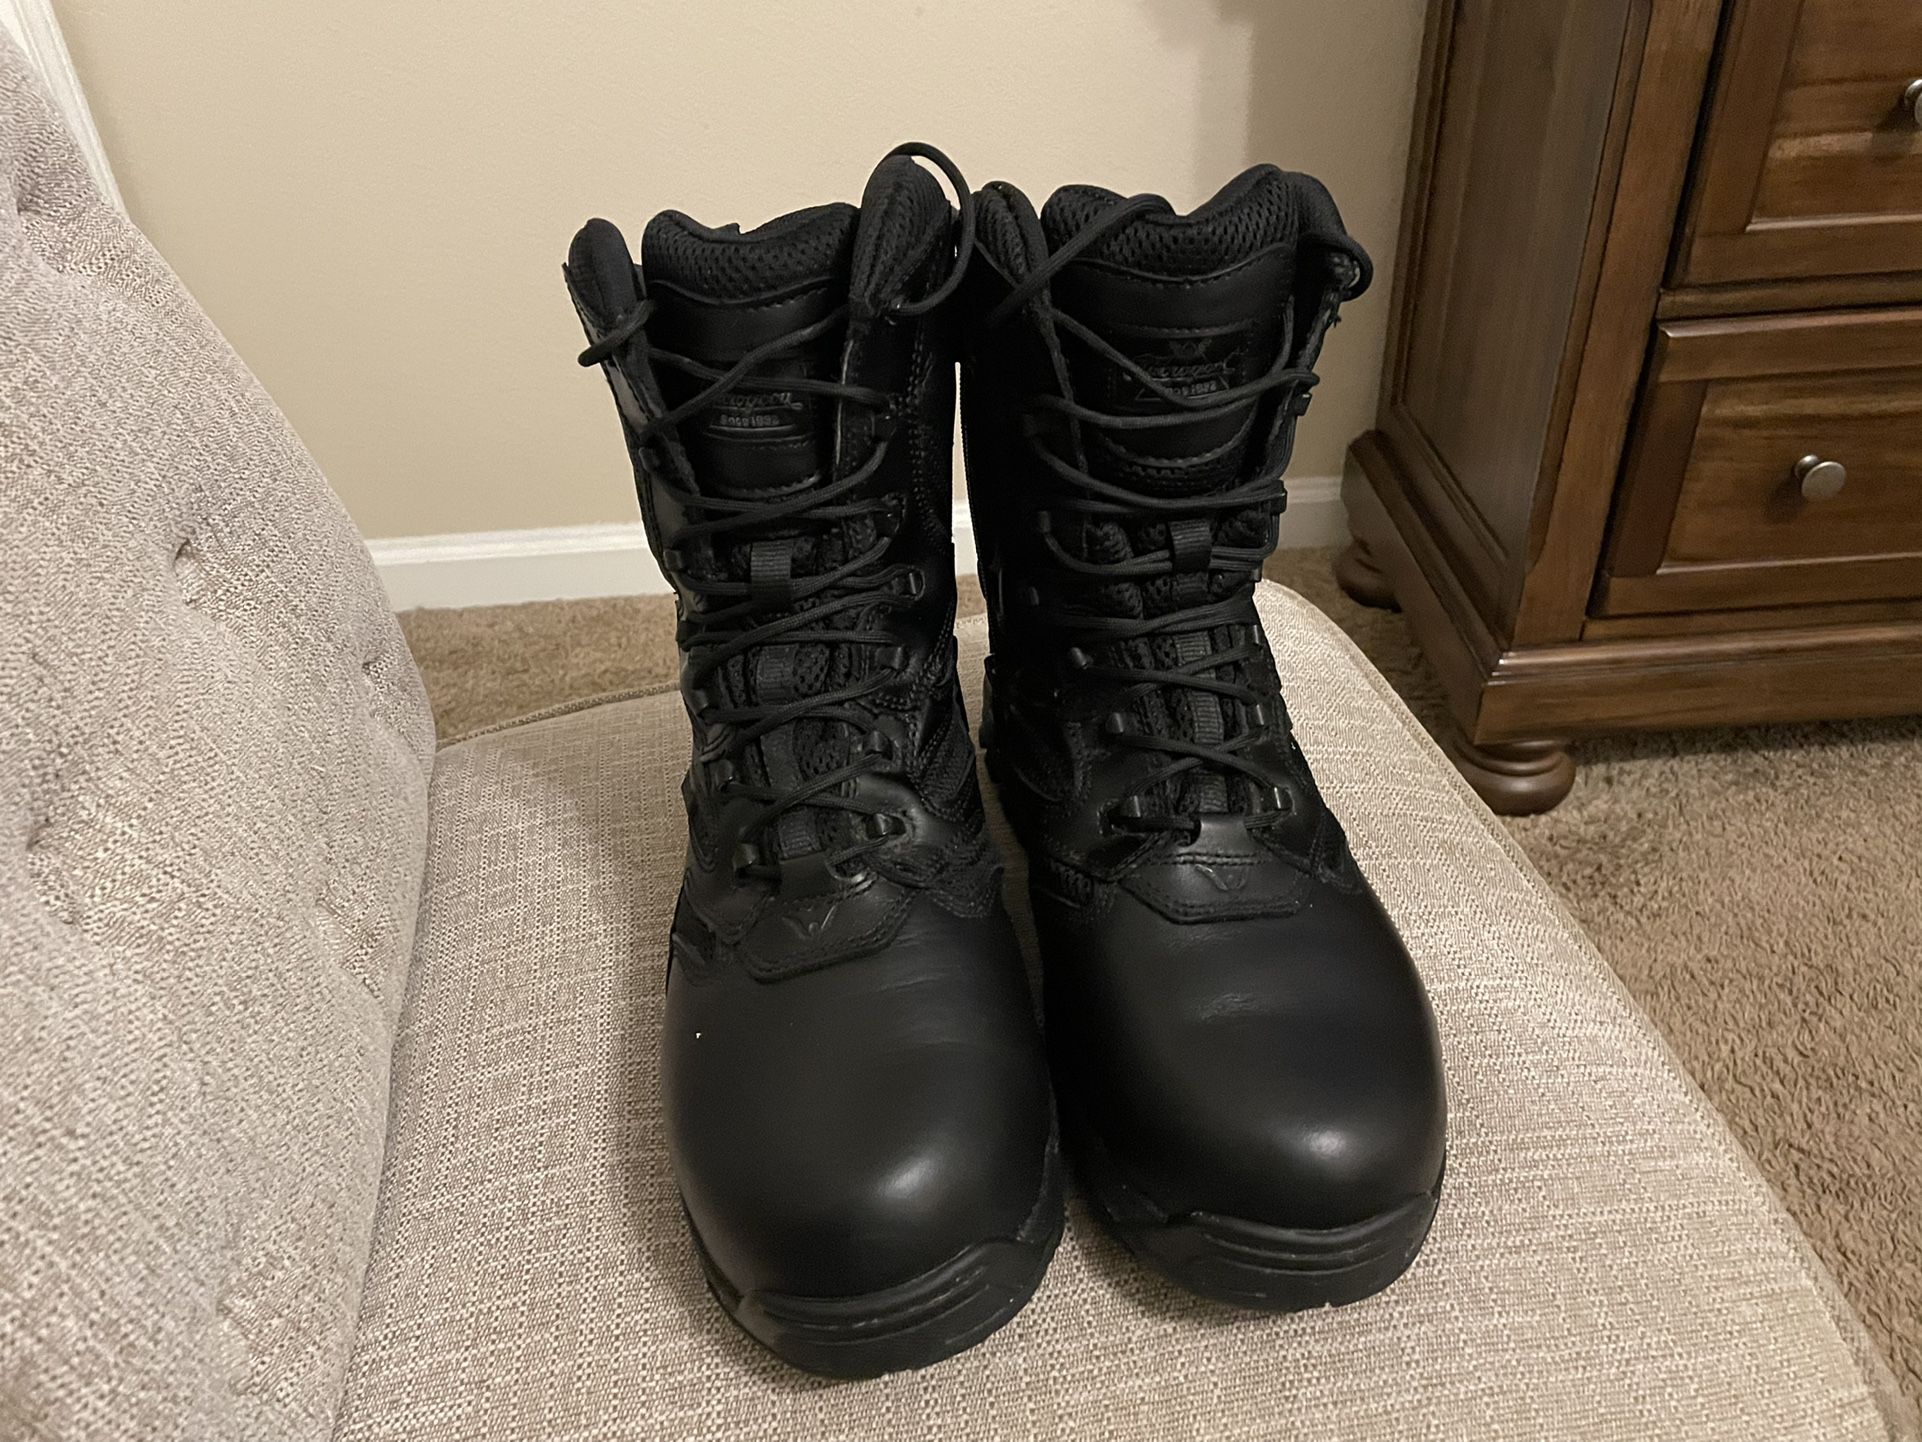 Men's 8" Thorogood Waterproof & Insulated Work Boots